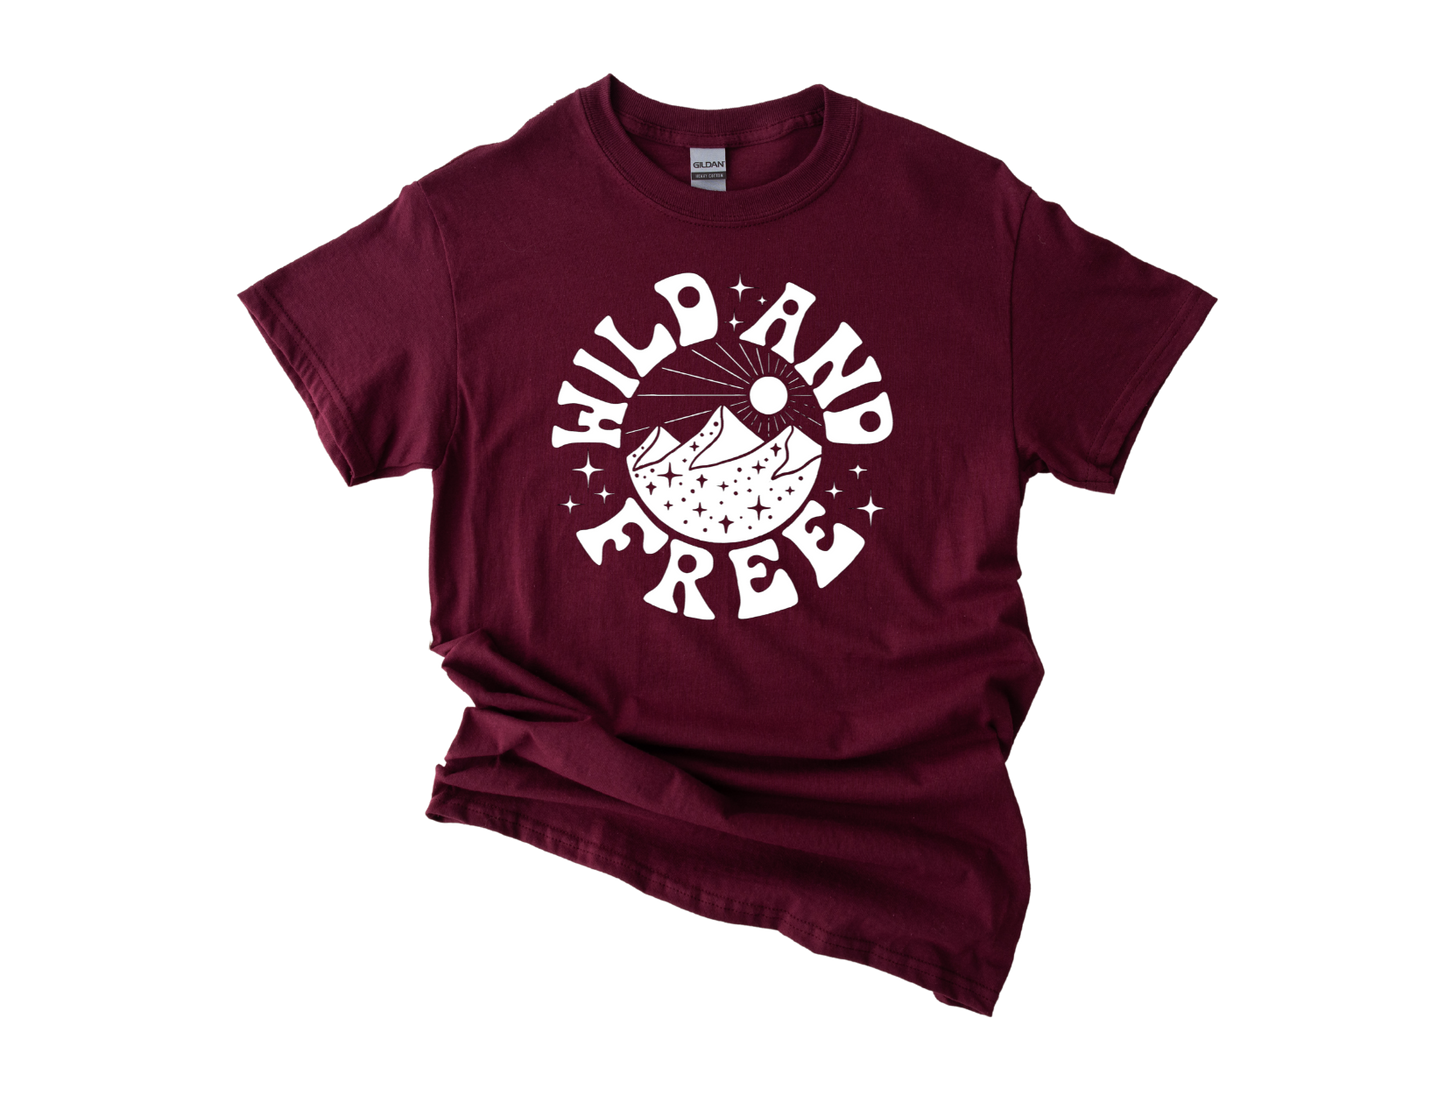 Wild and Free T-Shirt